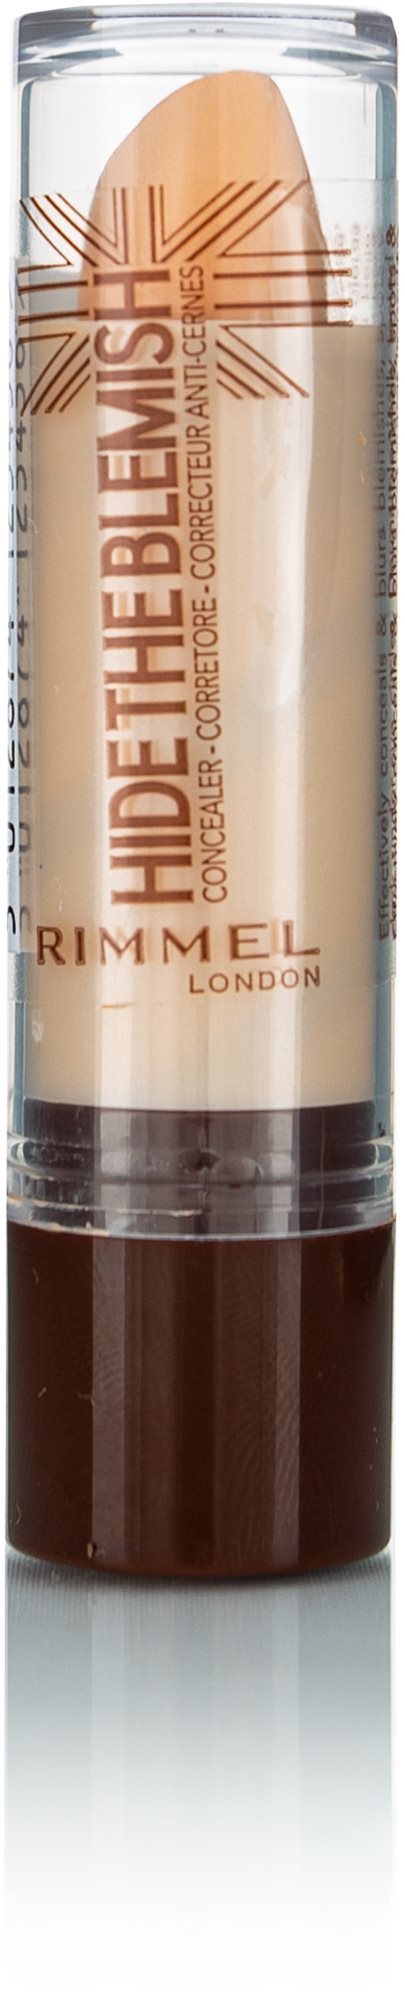 Korrektor RIMMEL LONDON Hide The Blemish 003 Soft Honey 4